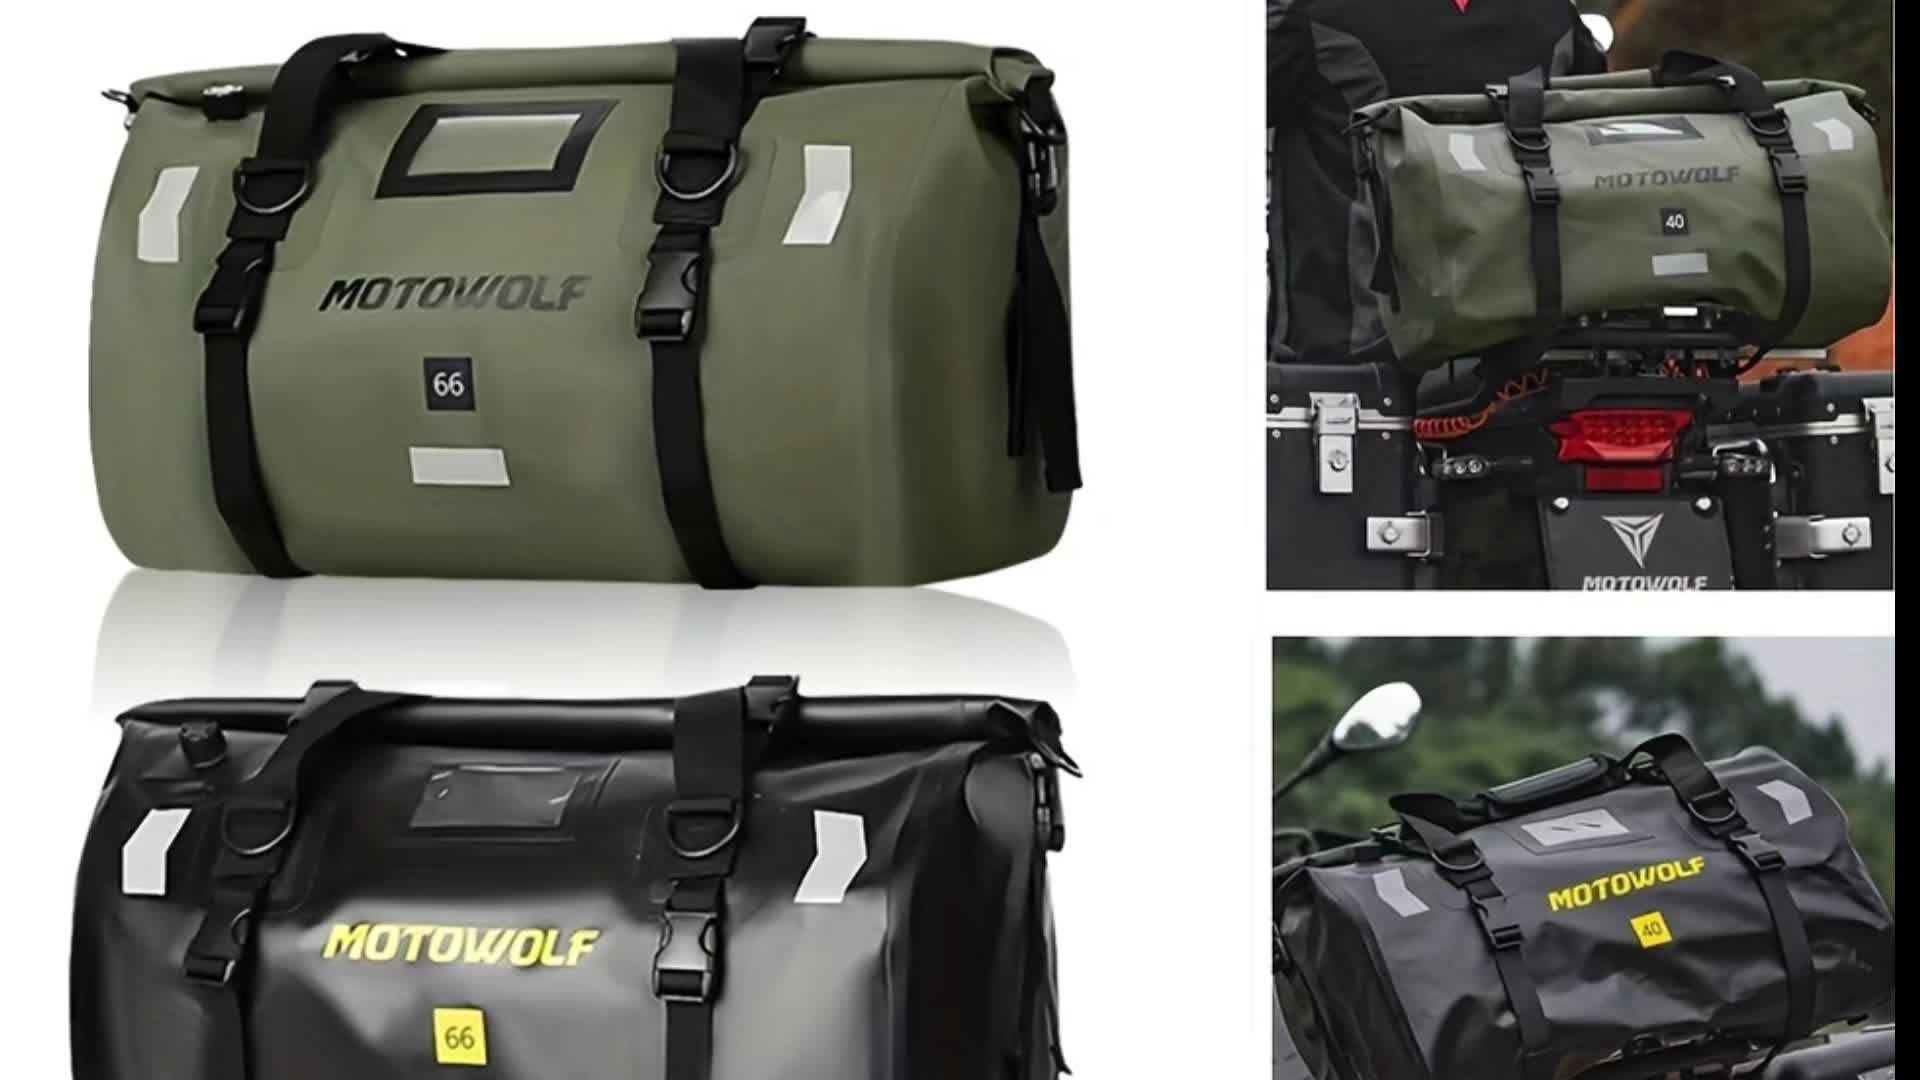  BORLENI Motorcycle Dry Bag Waterproof Motorcycle Luggage Bag  Motorcycle Duffel Bag for Skiing Travel Hiking Camping Boating Riding  Fishing (Black,40L) : Sports & Outdoors